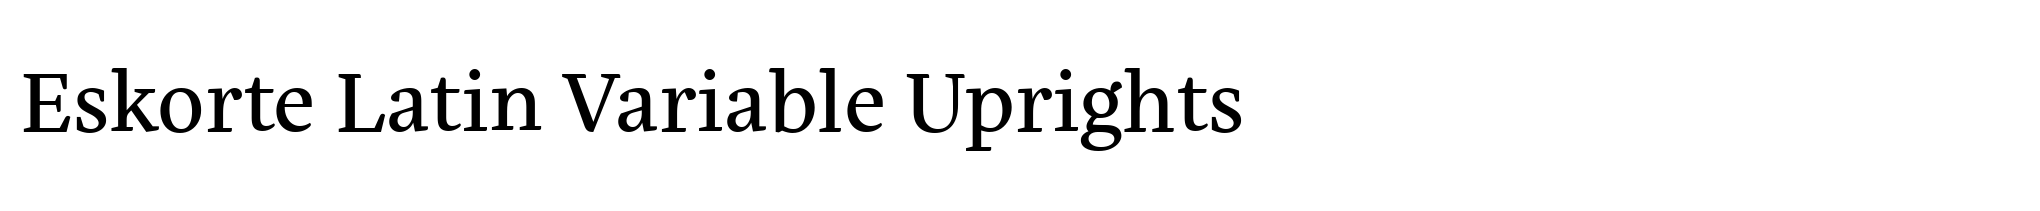 Eskorte Latin Variable Uprights image